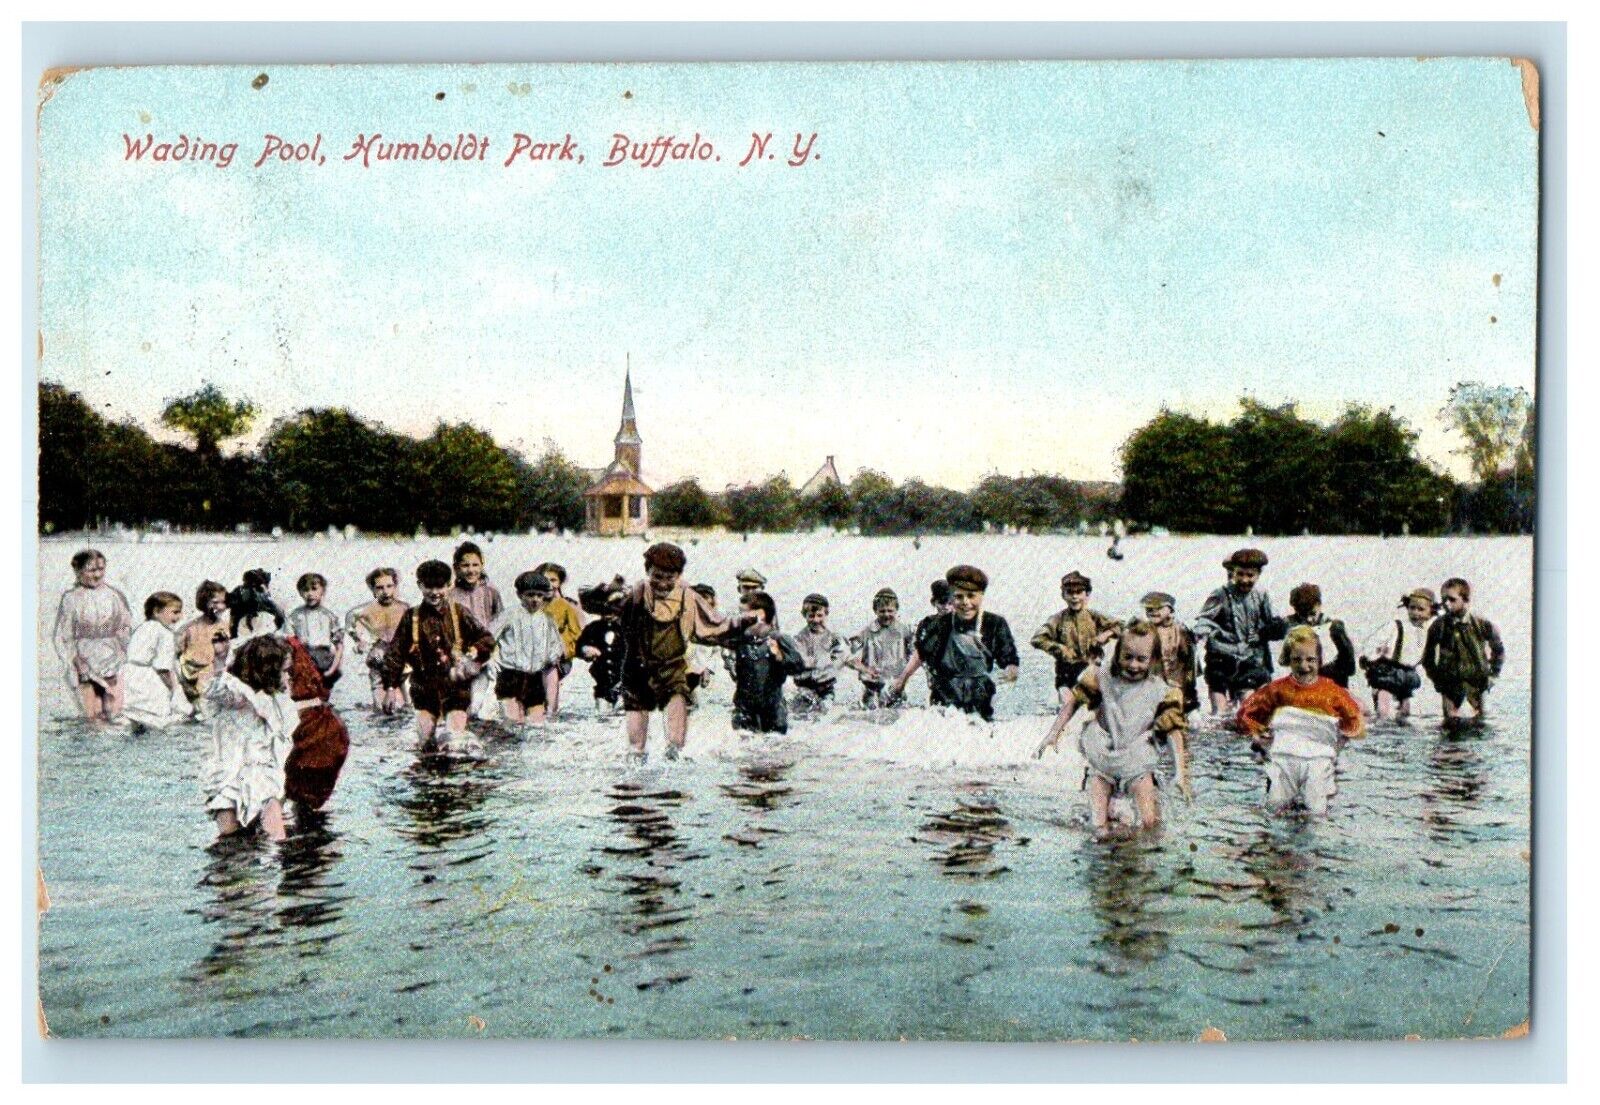 1908 Wading Pool Humboldt Park Kids Fun Buffalo New York NY Antique Postcard